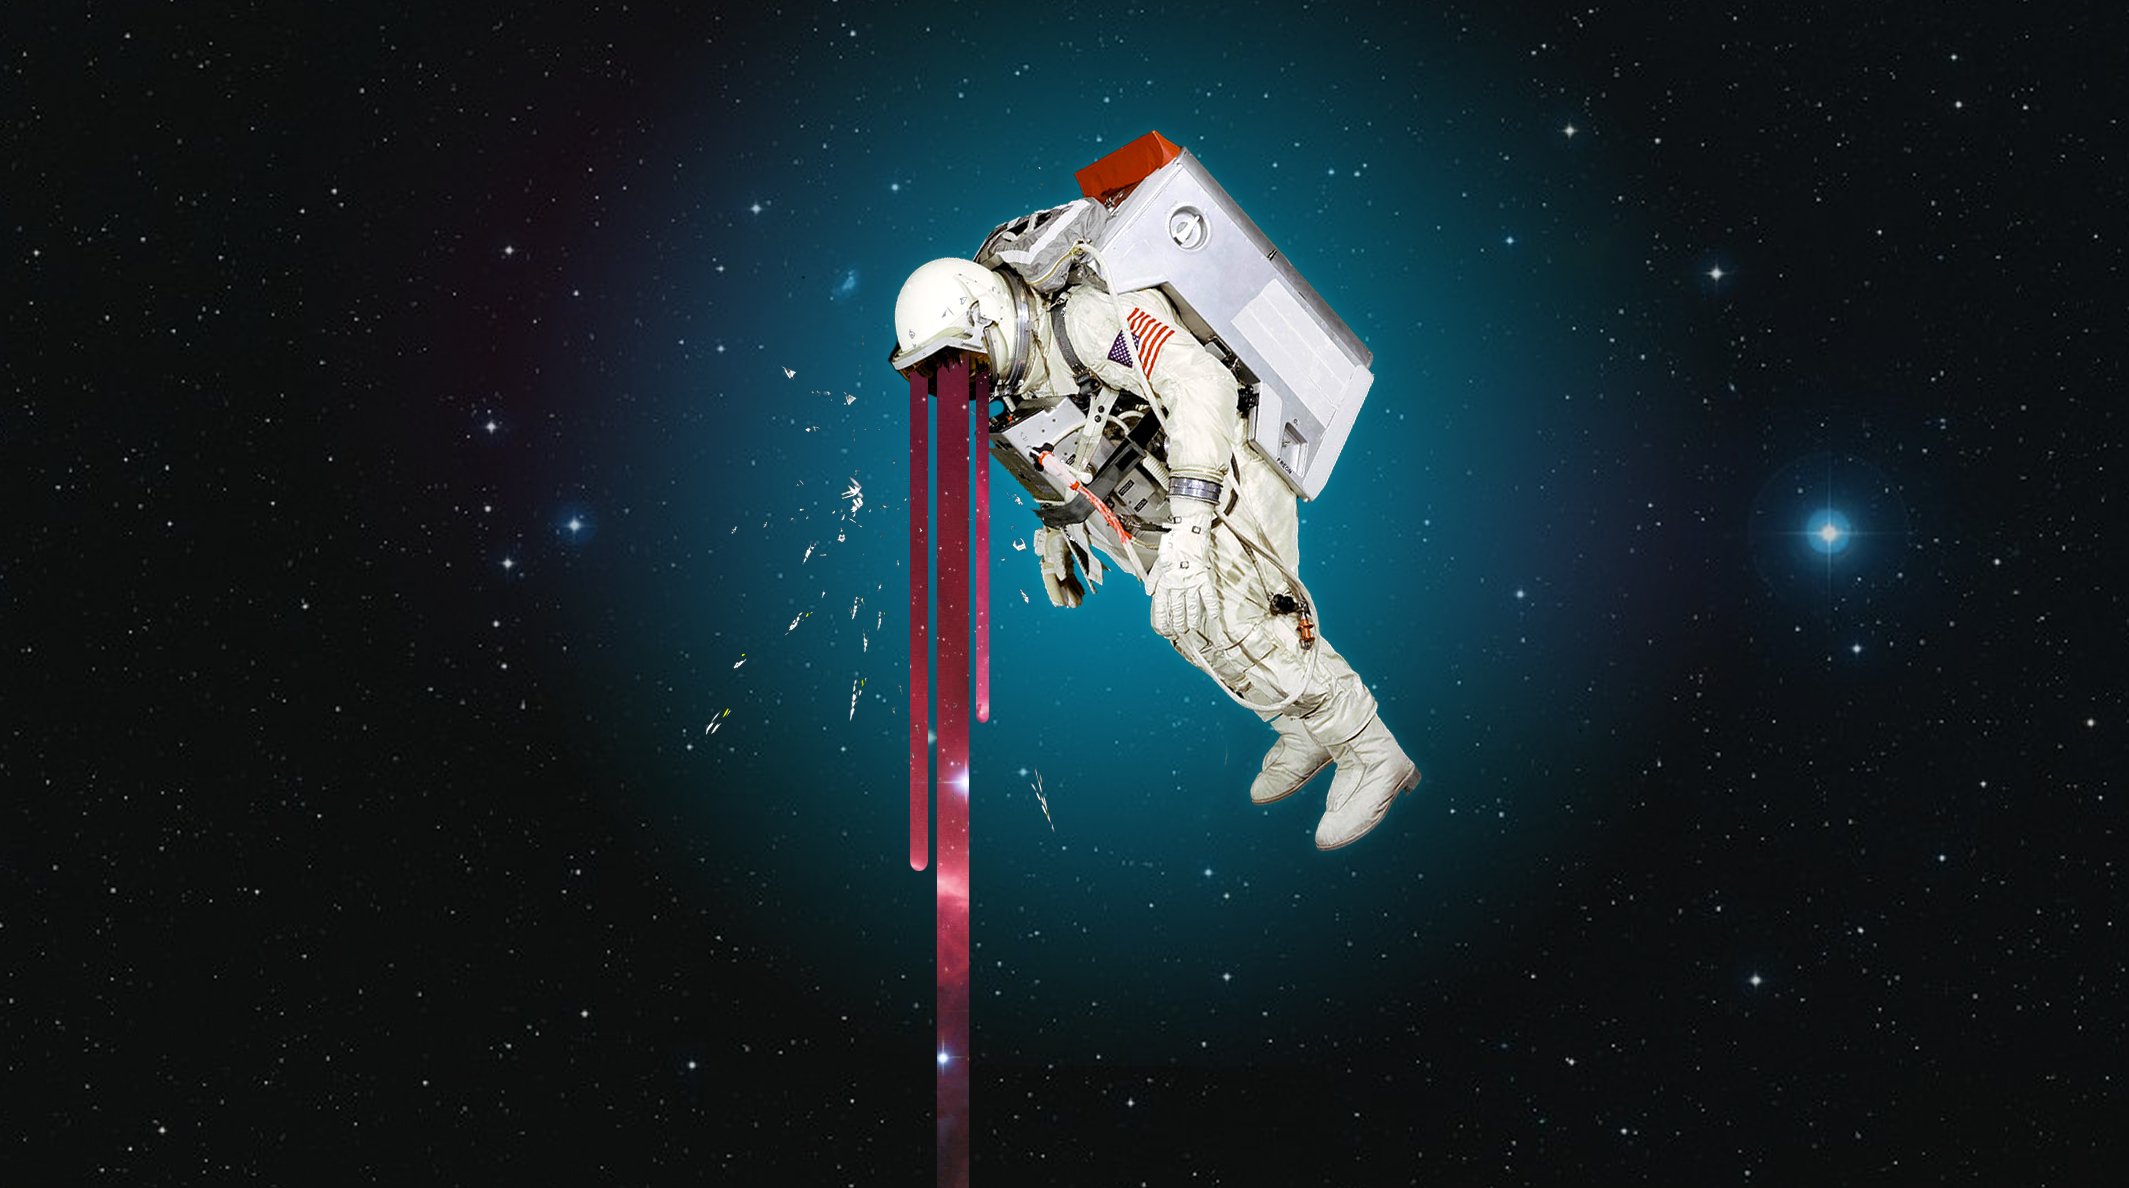 astronaut wallpaper,astronaut,outer space,space,flip (acrobatic),satellite